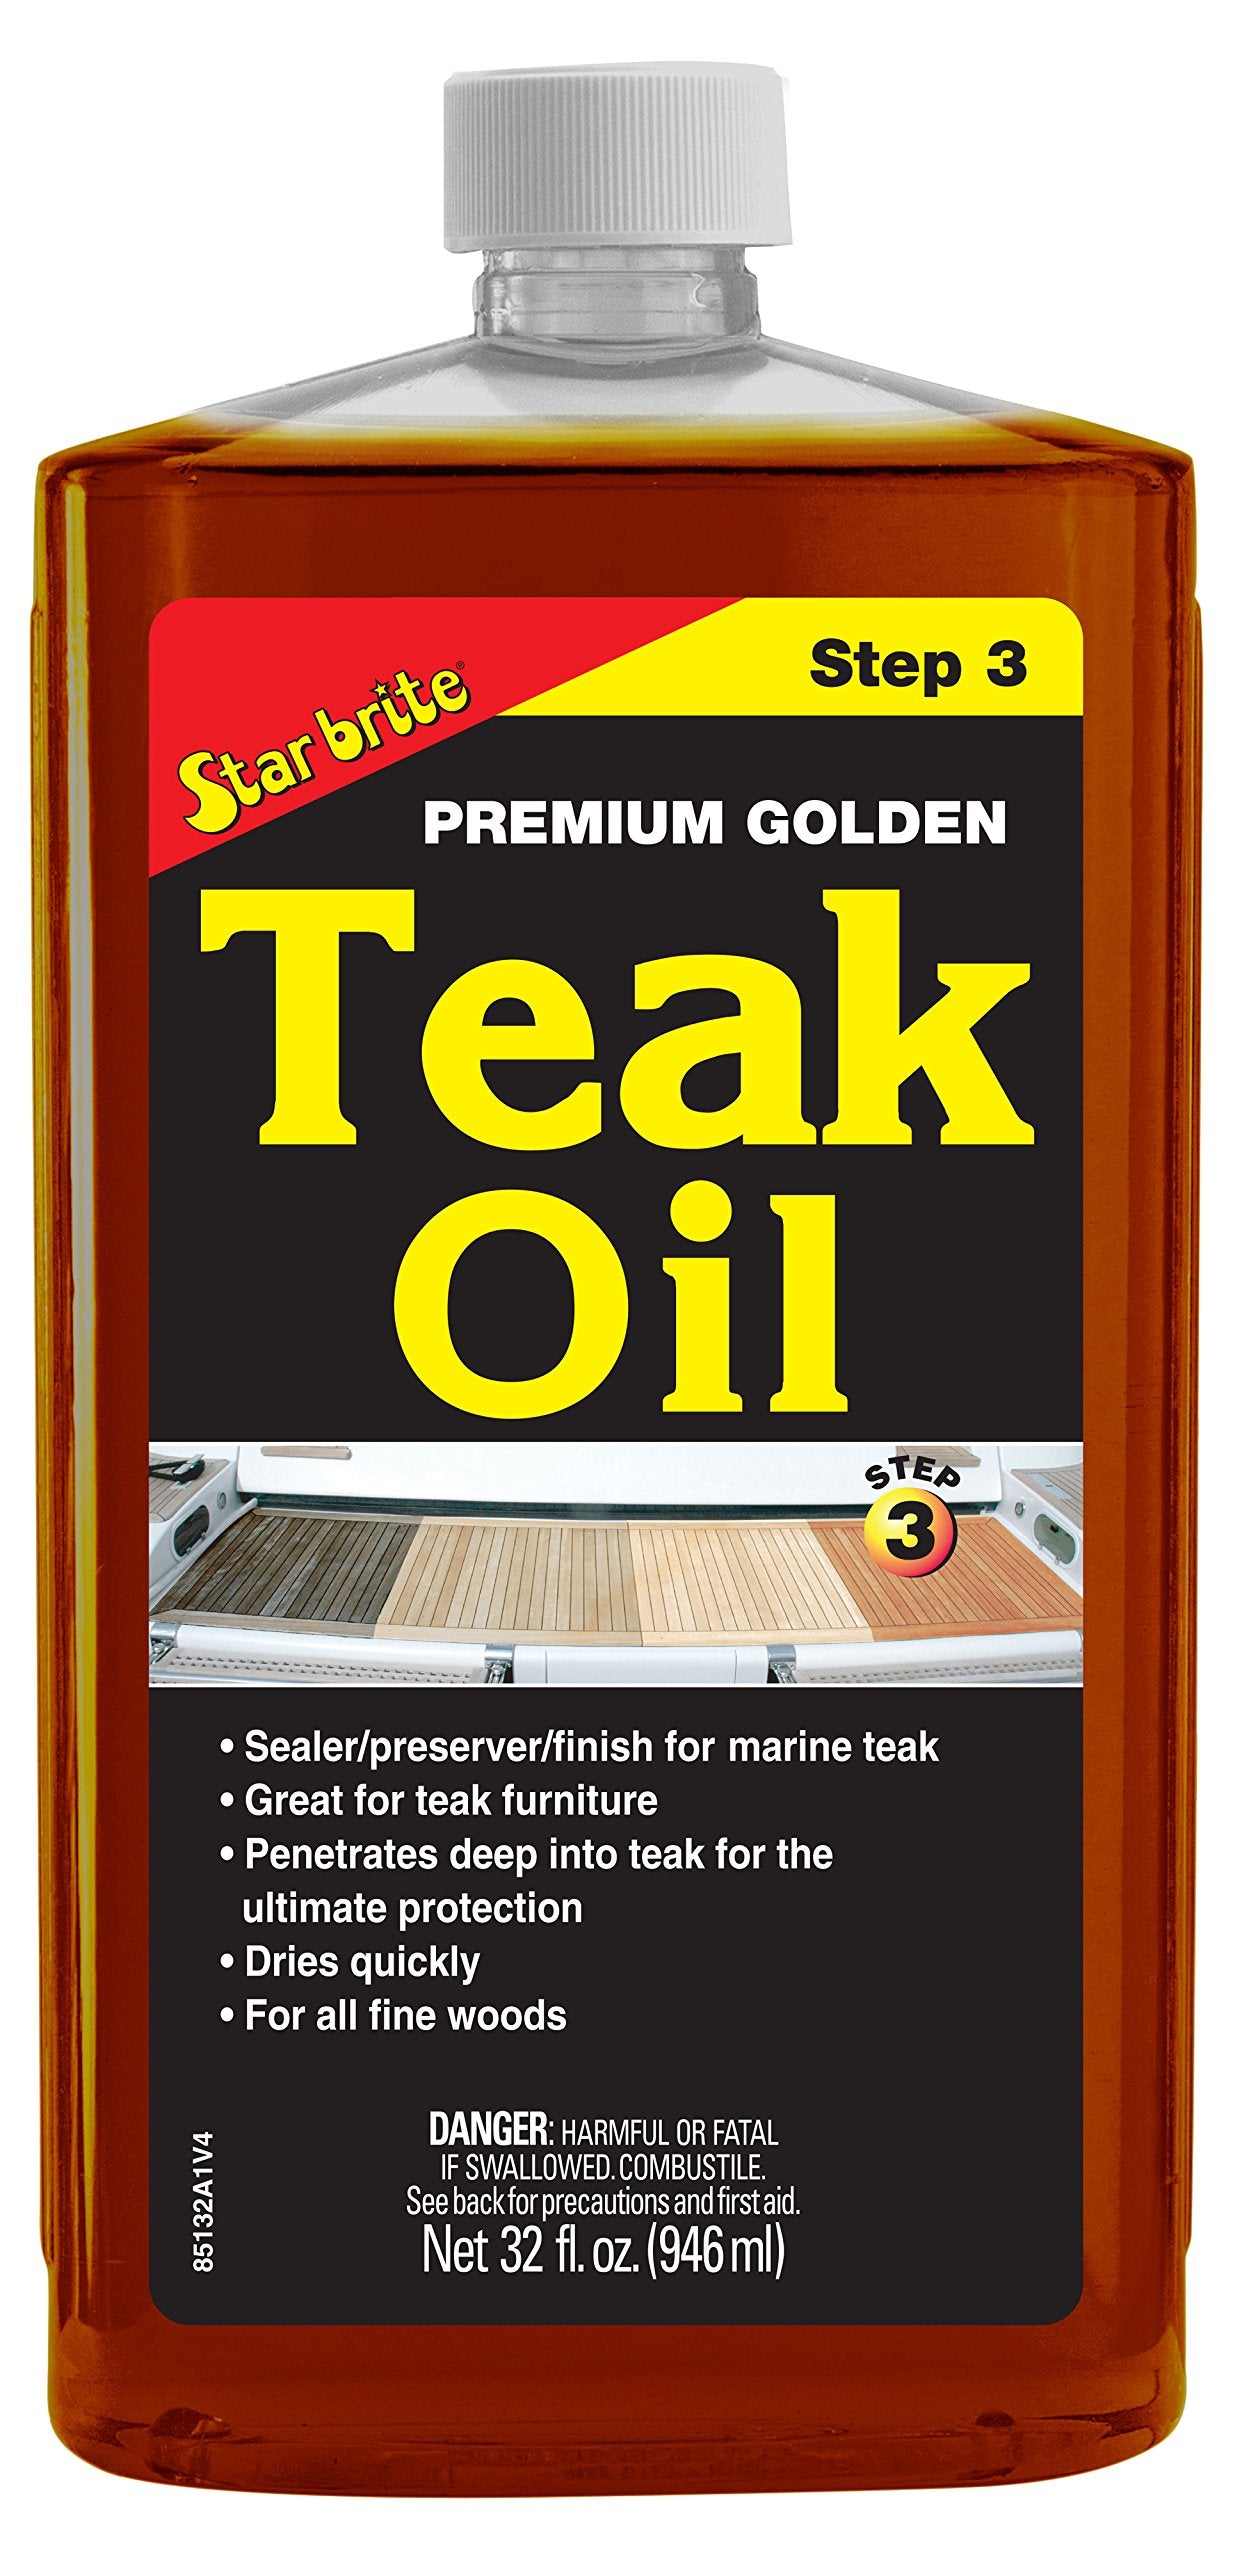 Starbrite Premium Golden Teak Oil 32oz 85132 | 24